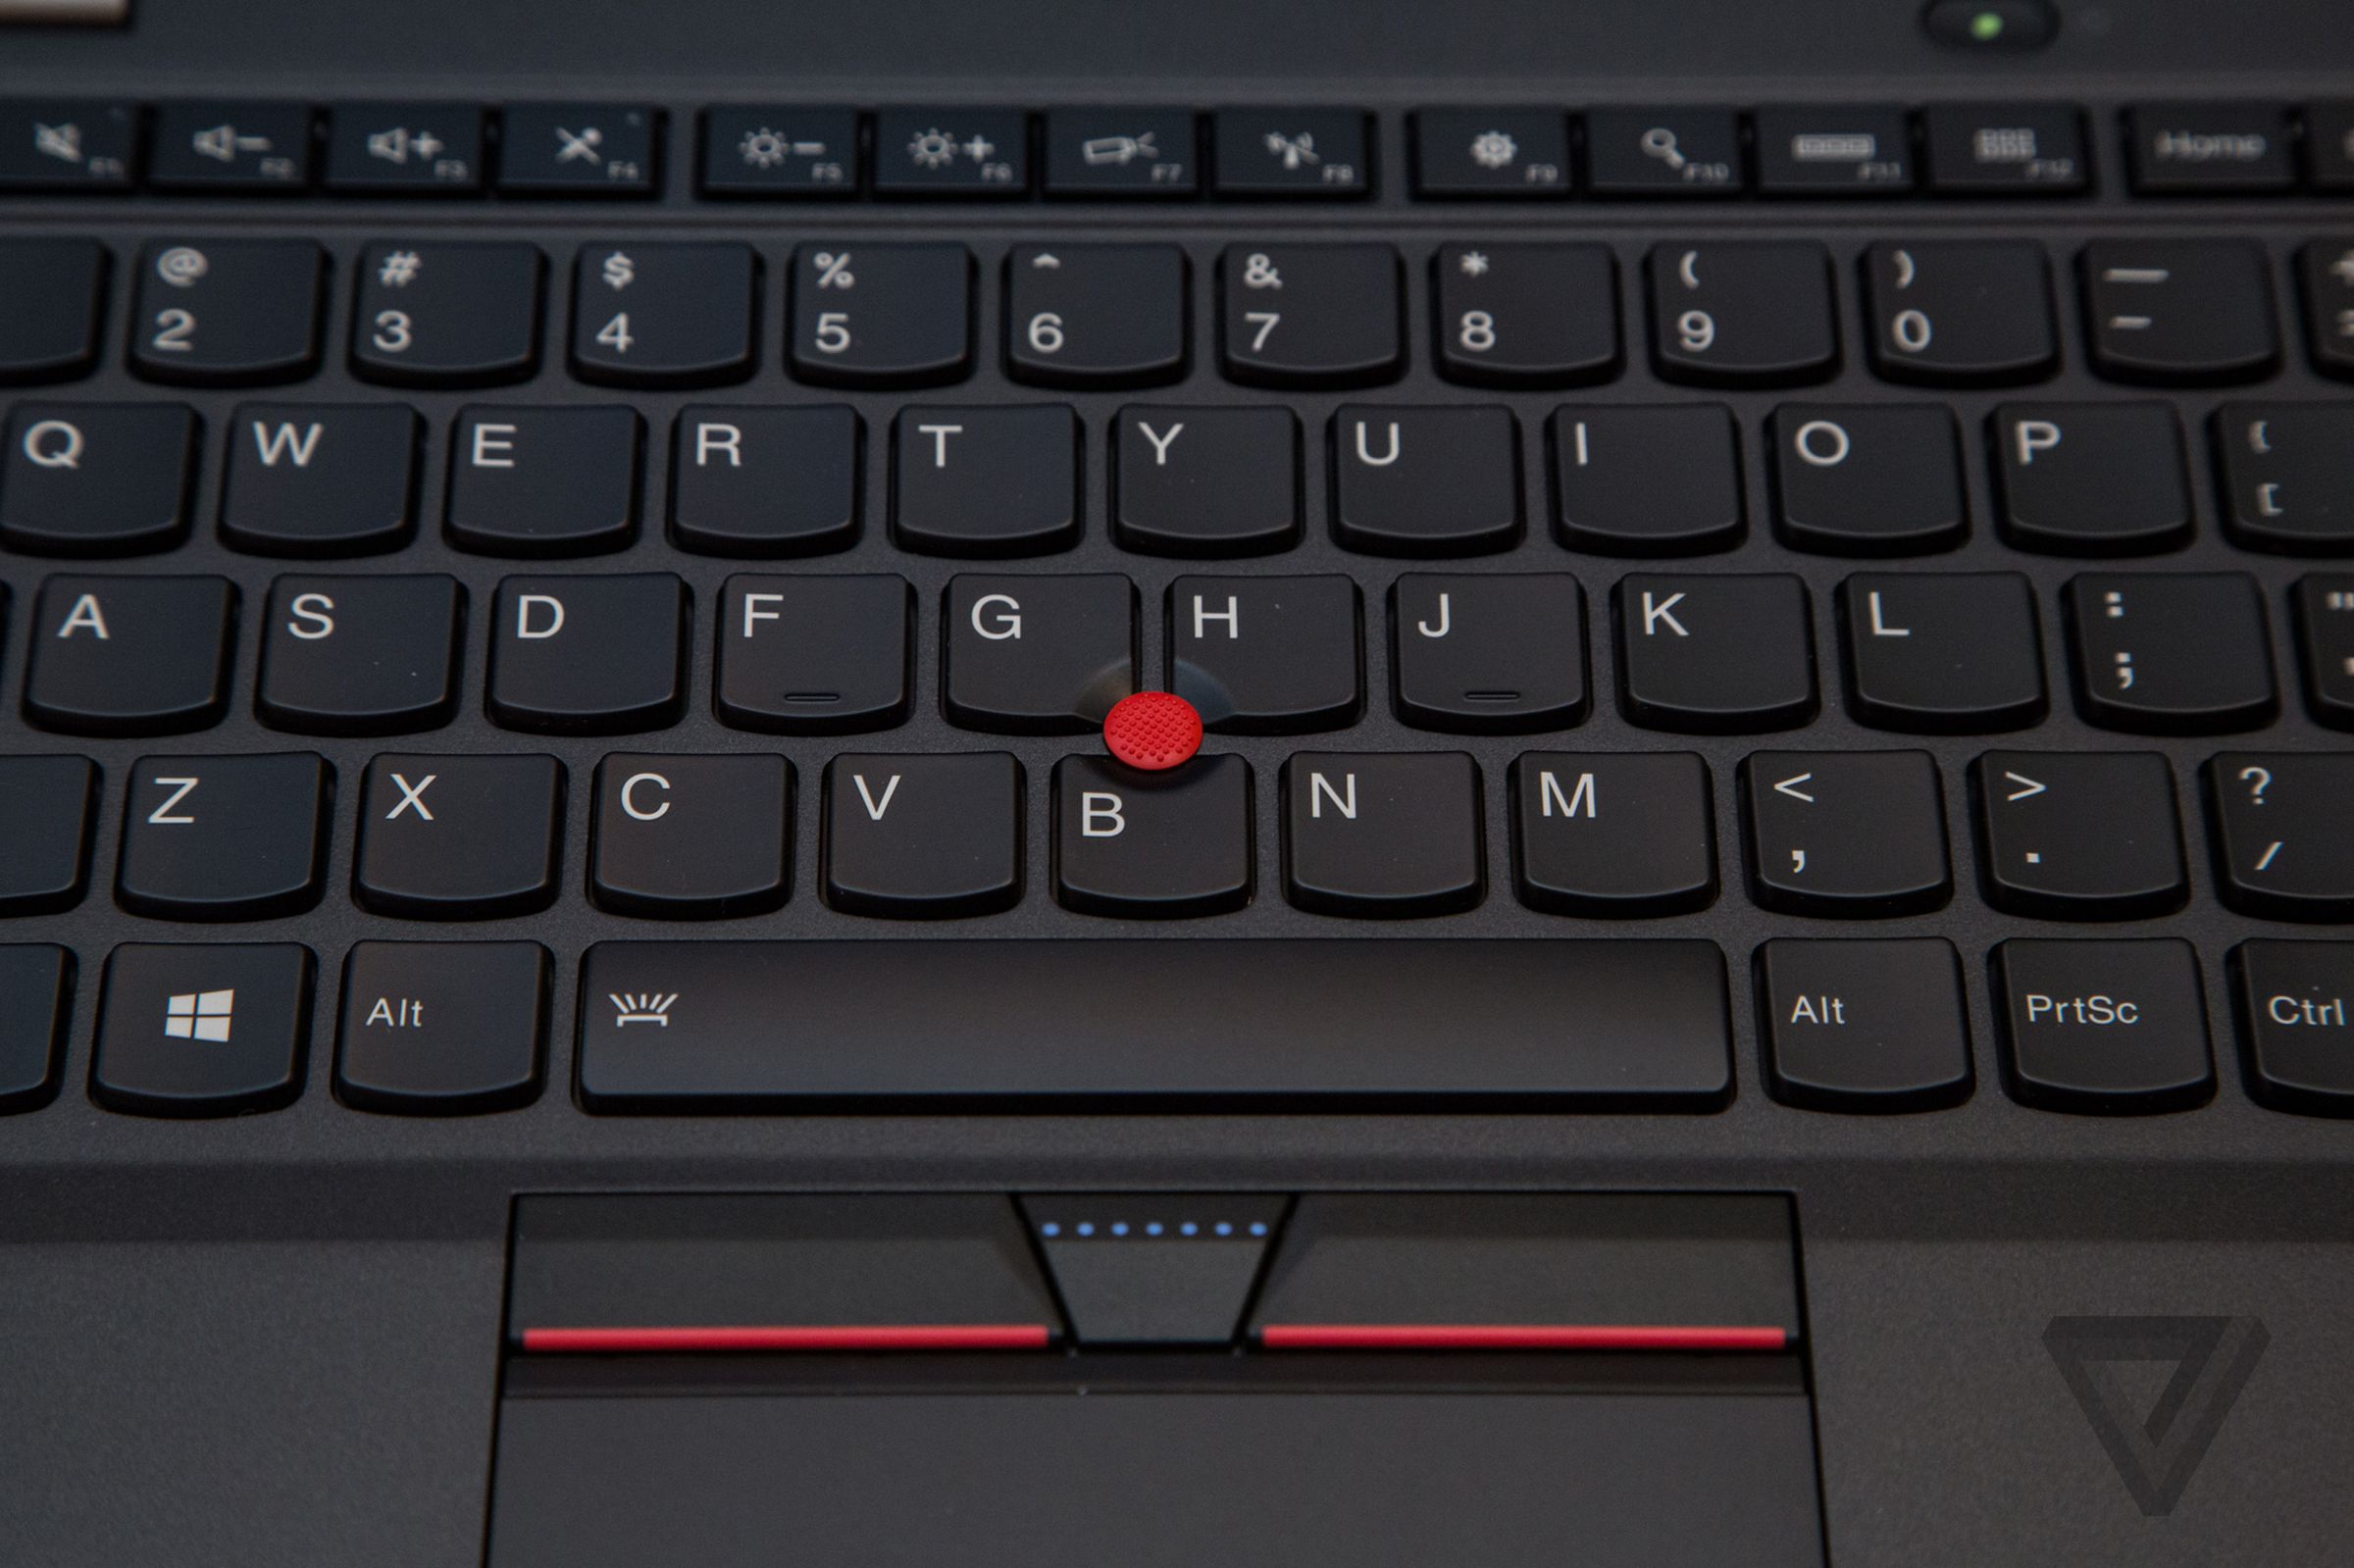 Lenovo ThinkPad X1 Carbon in photos